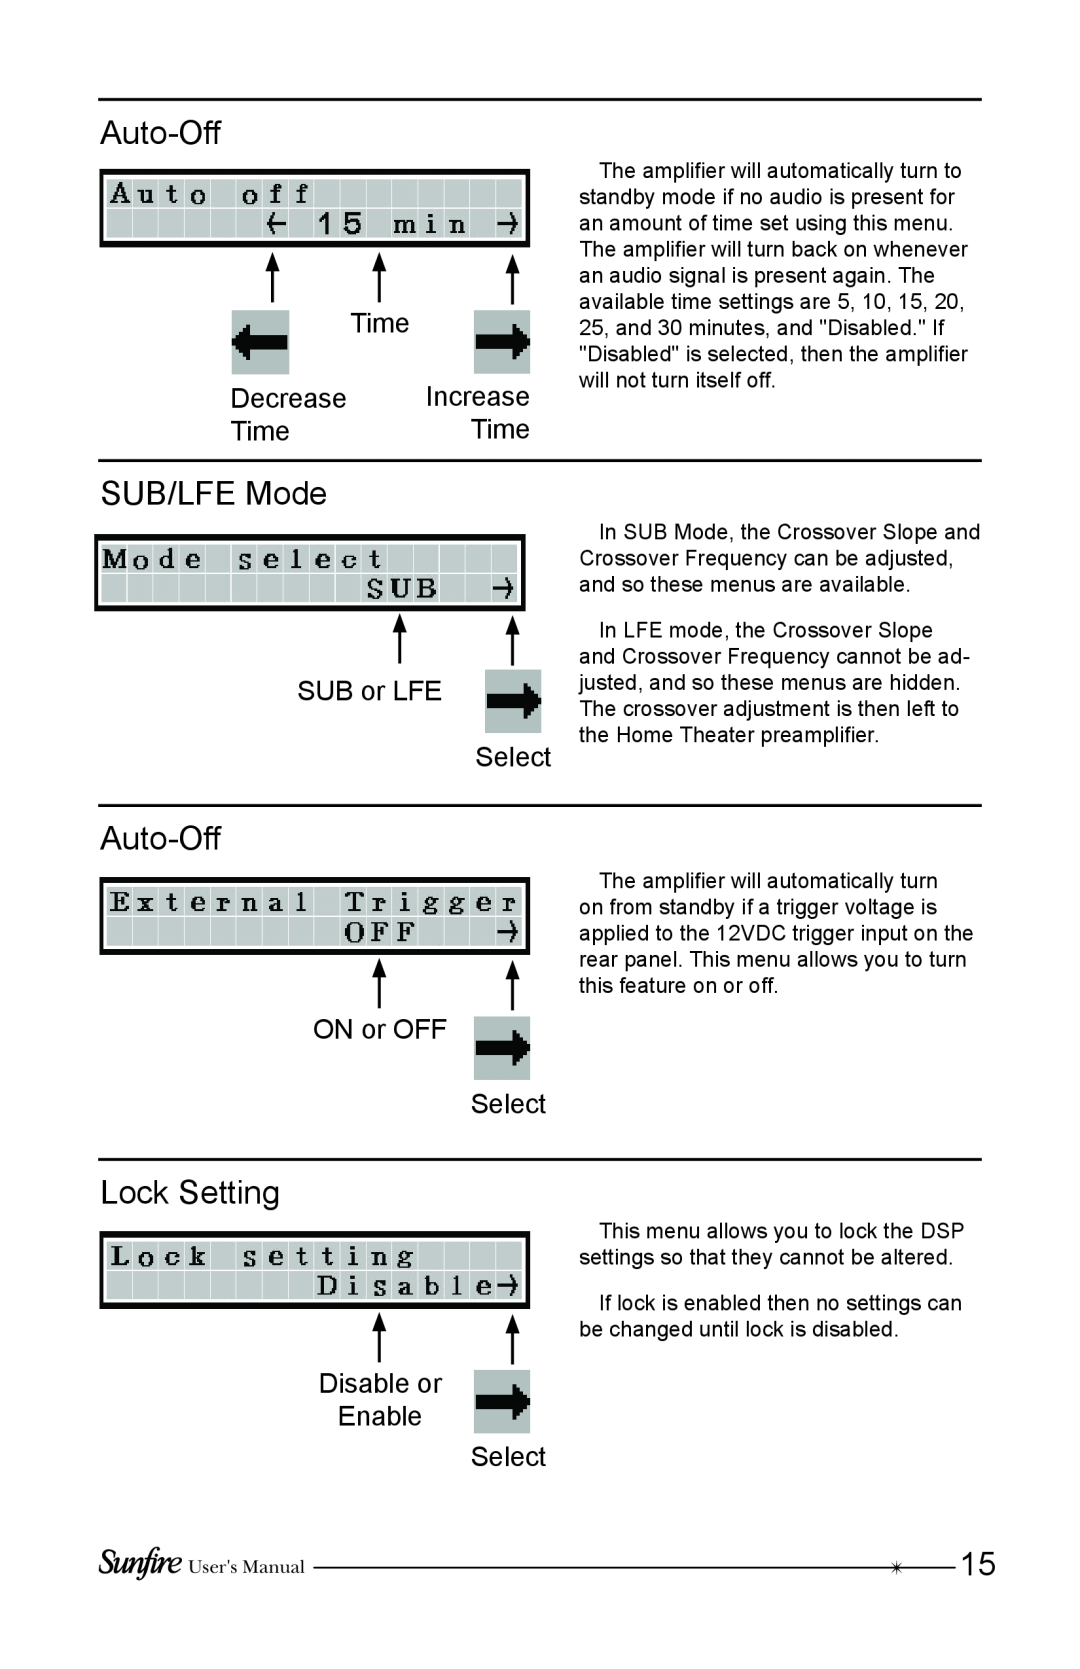 Sunfire HRSIW8 Auto-Off, SUB/LFE Mode, Lock Setting, Time Decrease Increase TimeTime, SUB or LFE, ON or OFF Select 